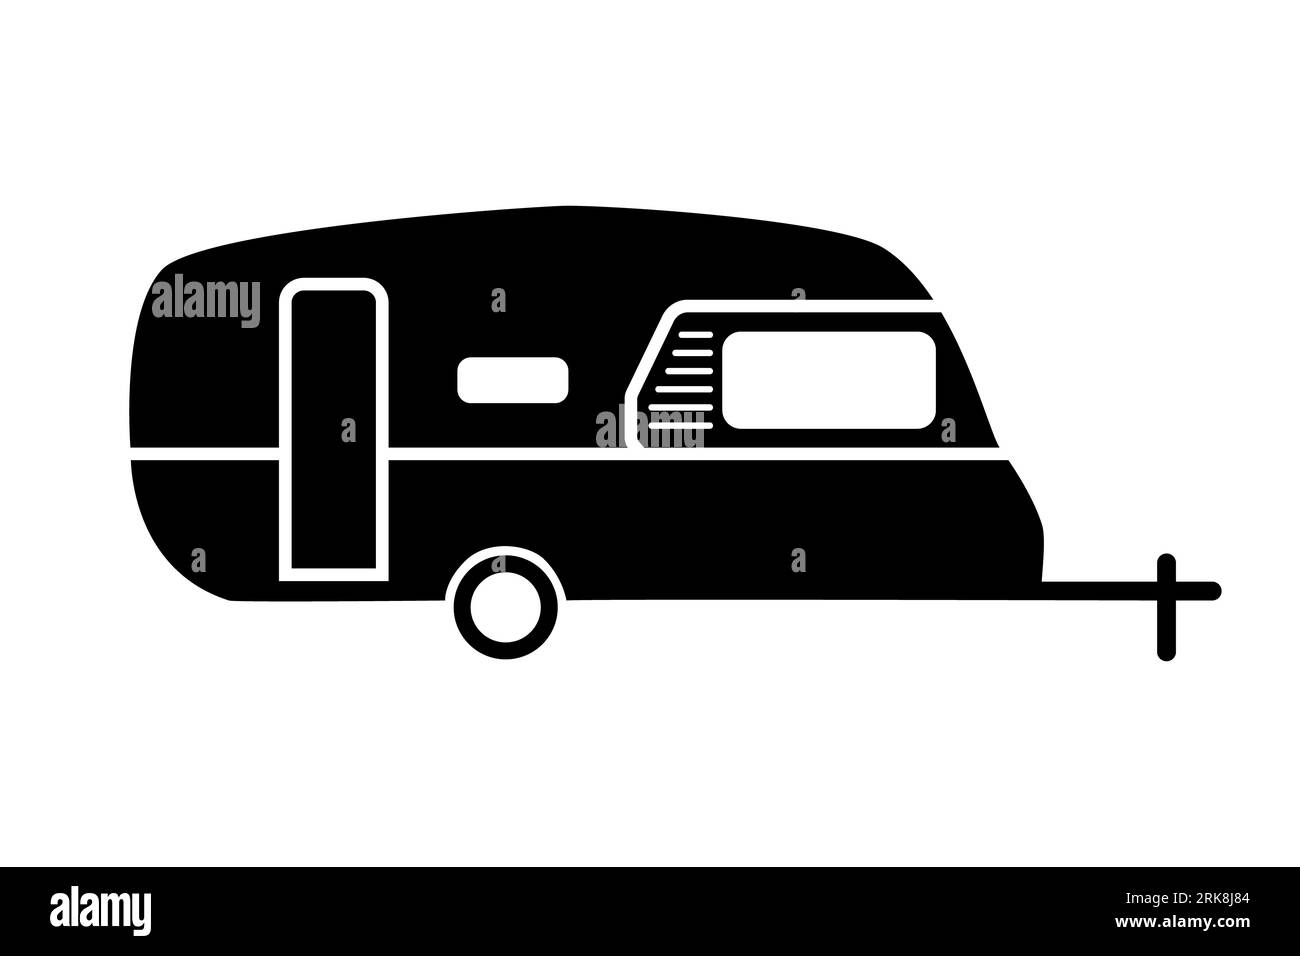 Travel trailer icon. Caravan camper. Stock Photo